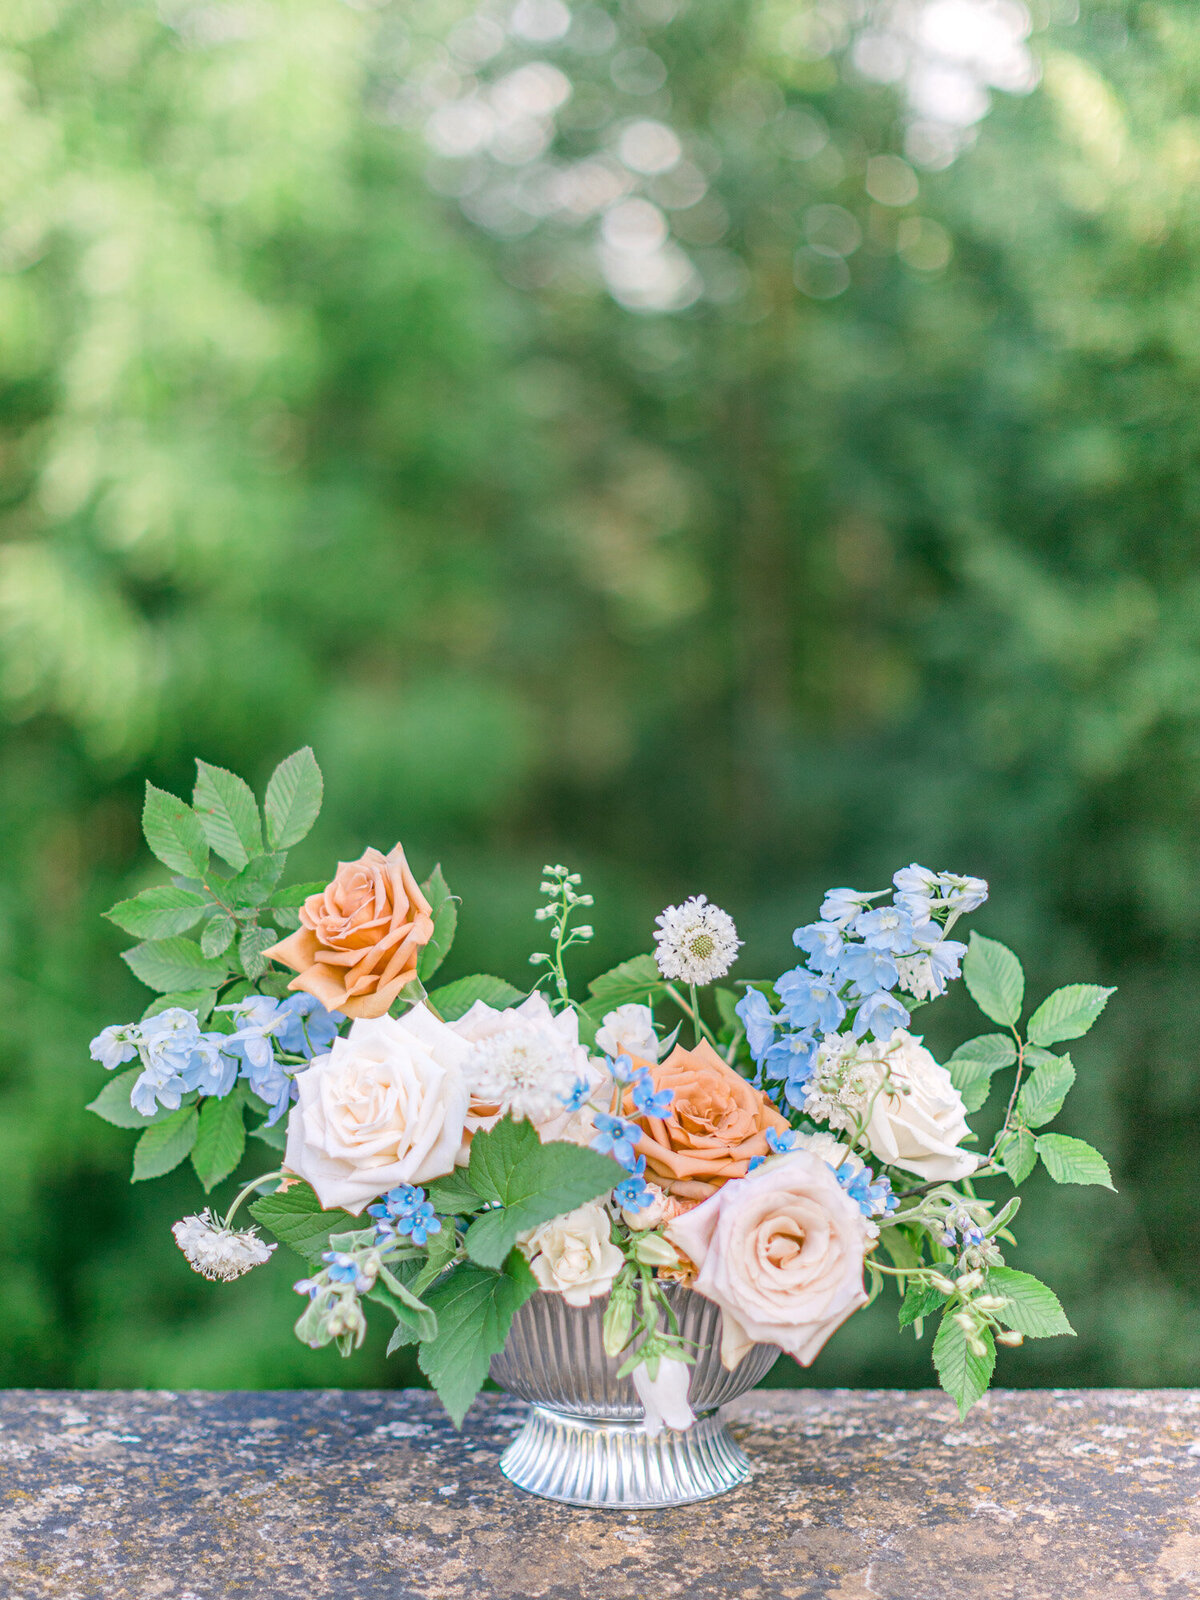 luxury flowers composition by floresie wedding photographer gigi fine art